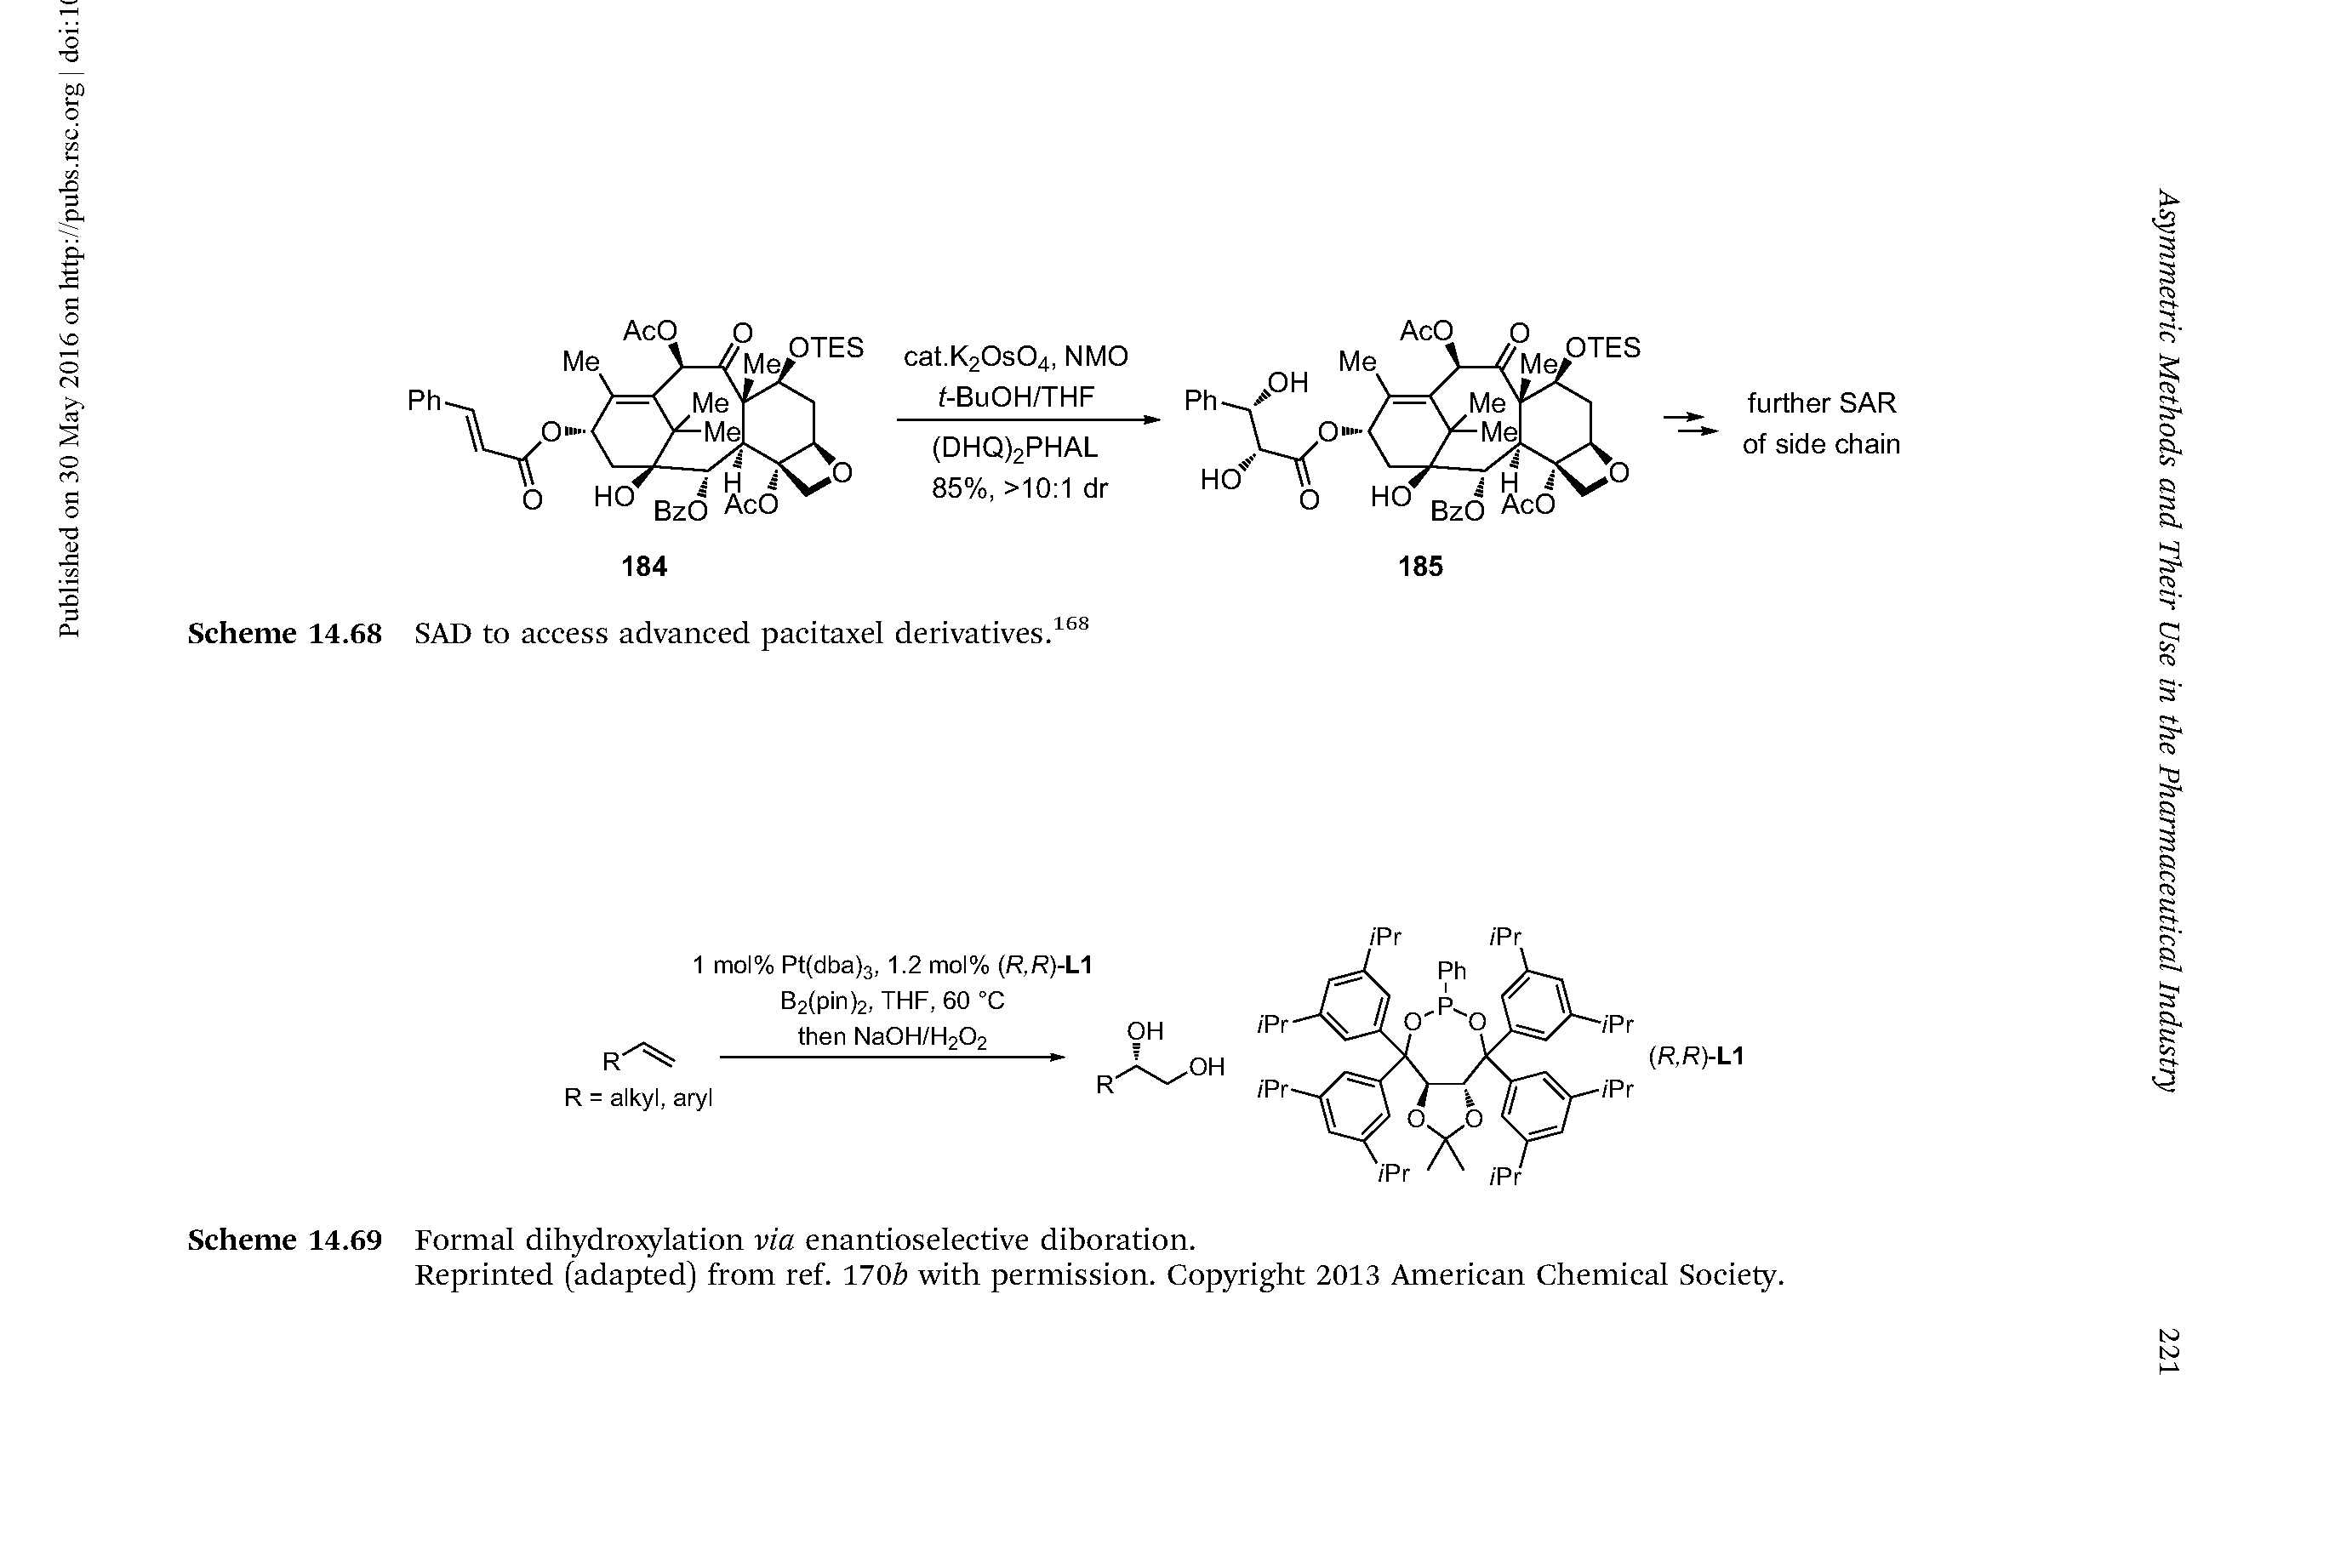 Scheme 14.69 Formal dihydro lation via enantioselective diboration.